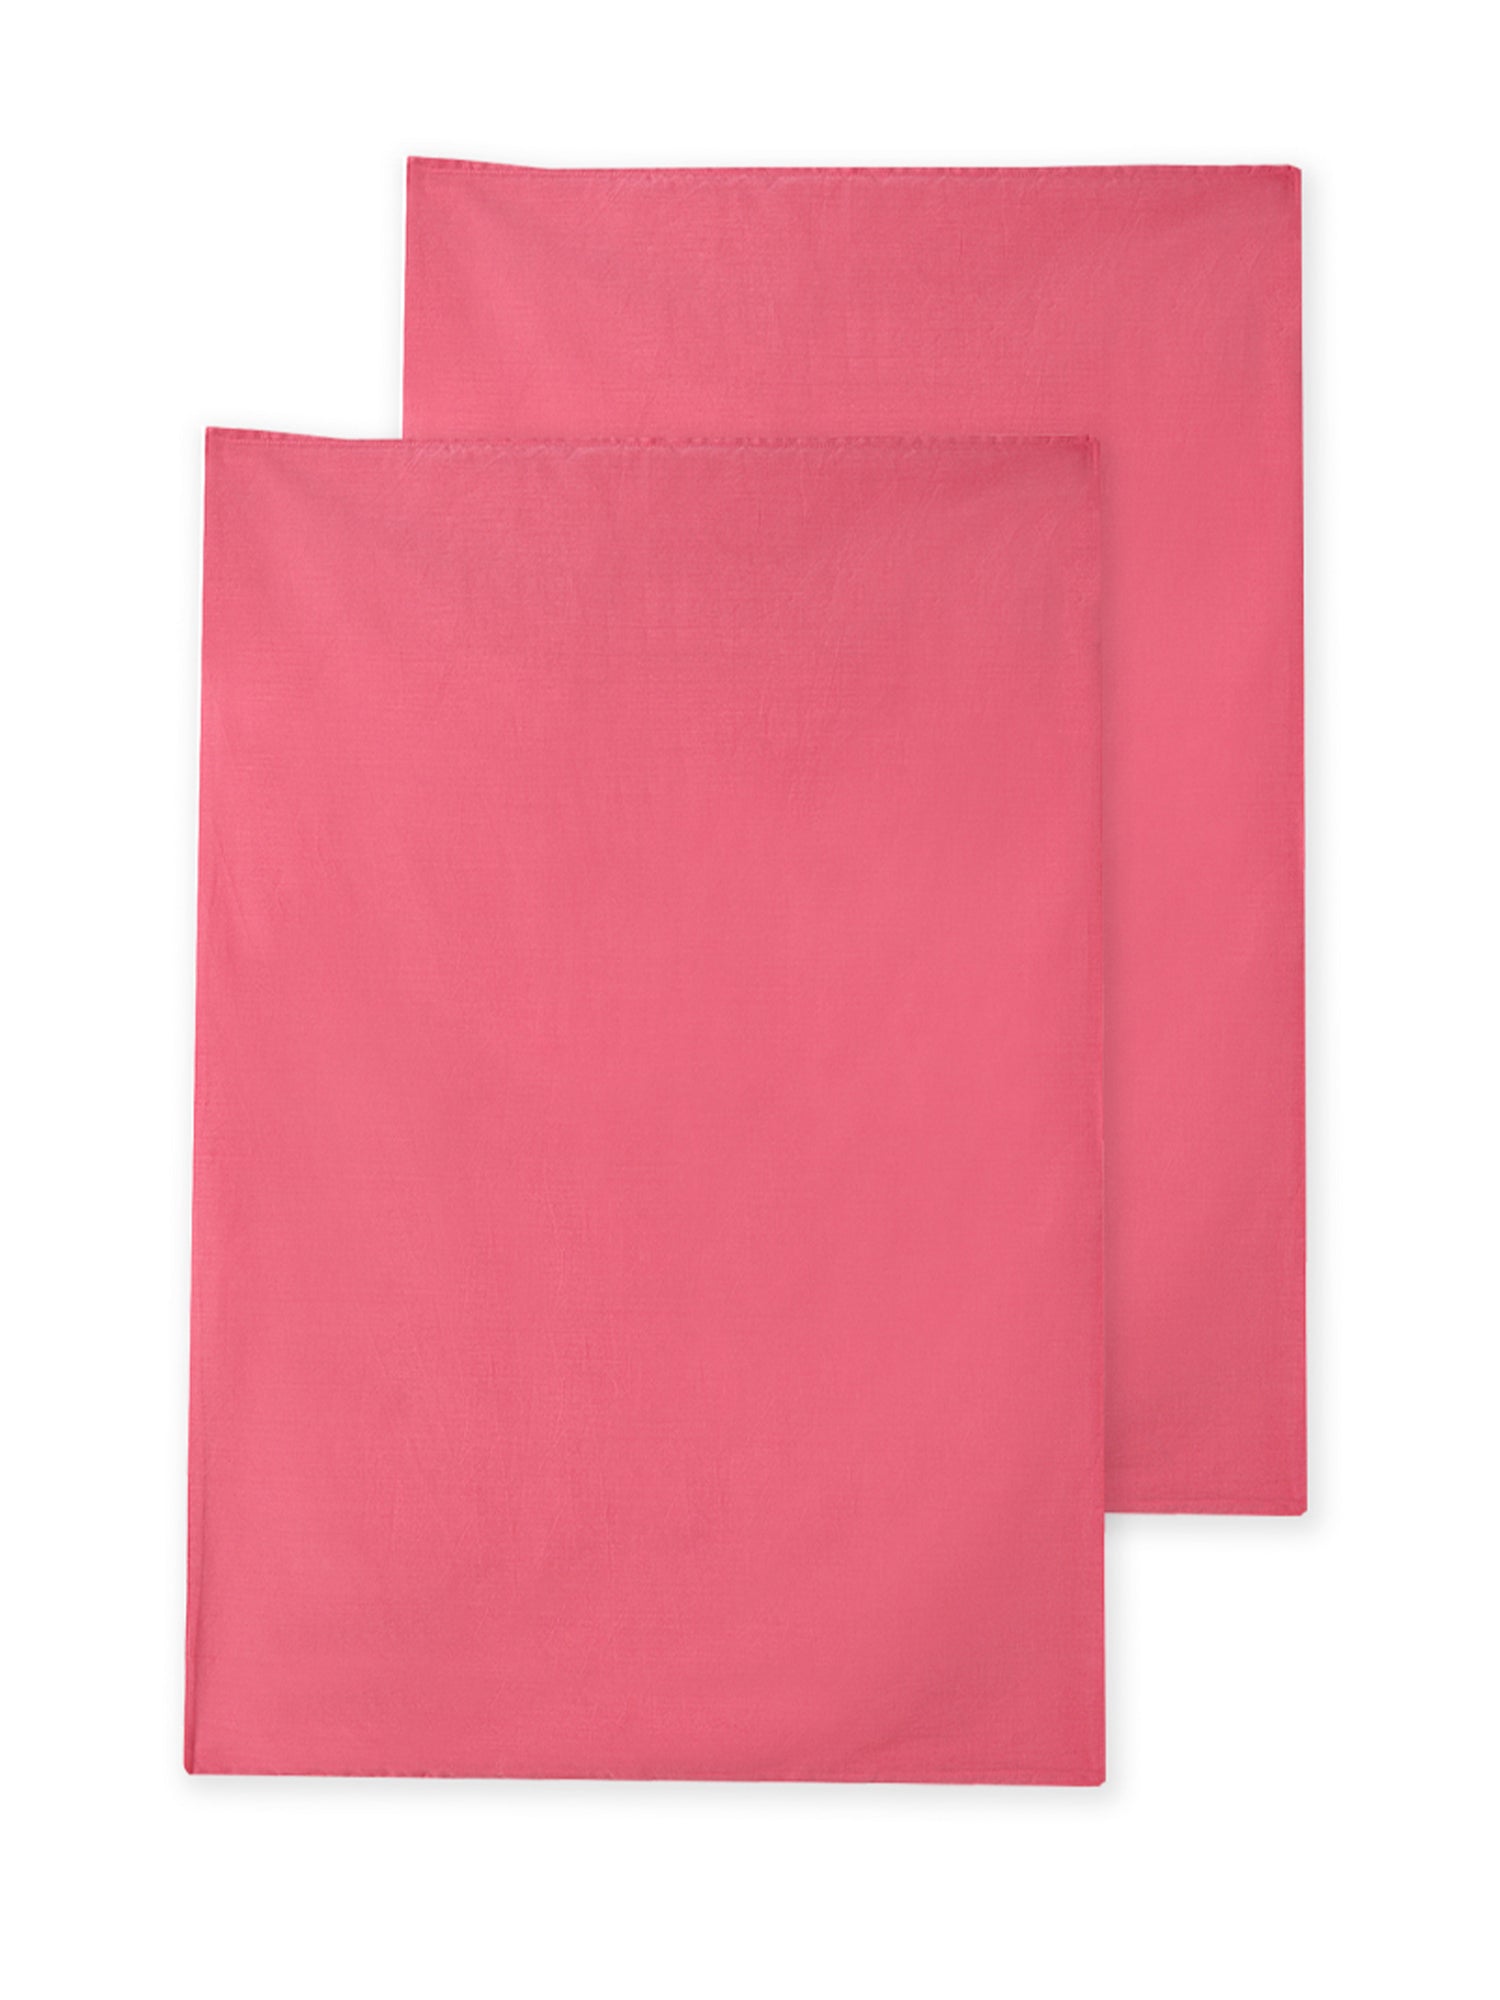 Seminyak Pink Fitted Twin Sheet & Pillowcase Set